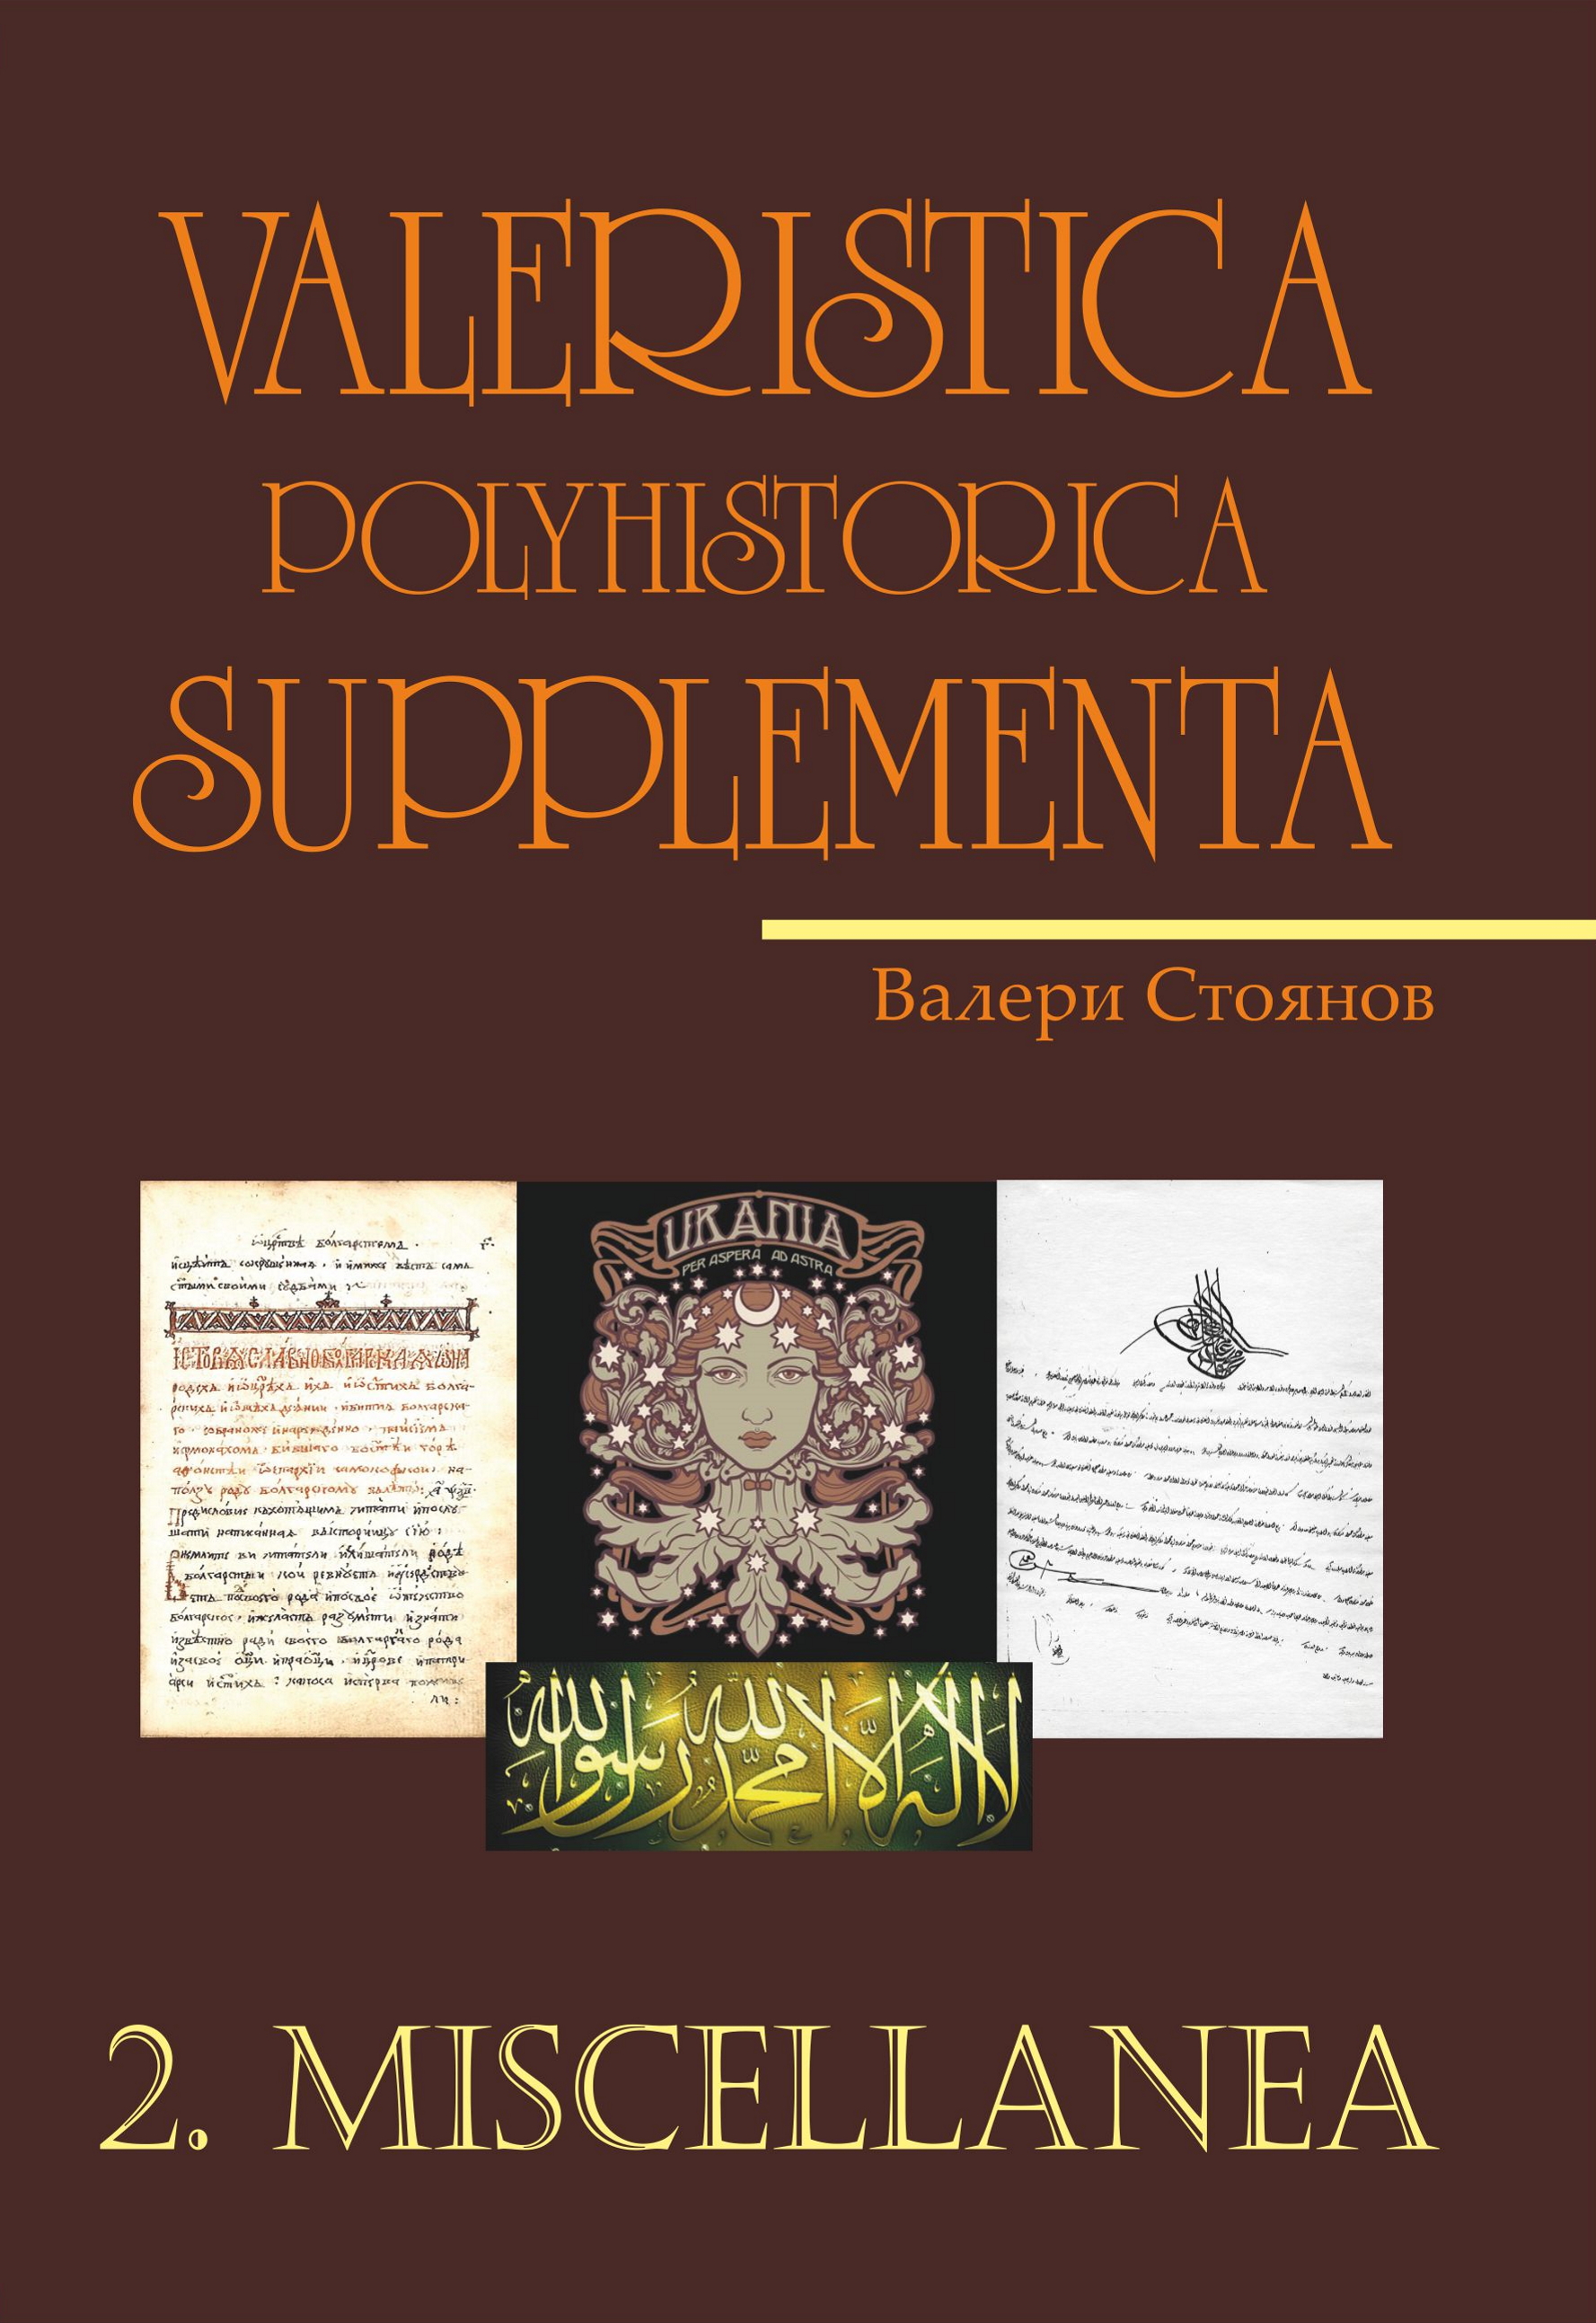 Valeristica Polyhistorica Supplementa, vol. 2. Miscellanea